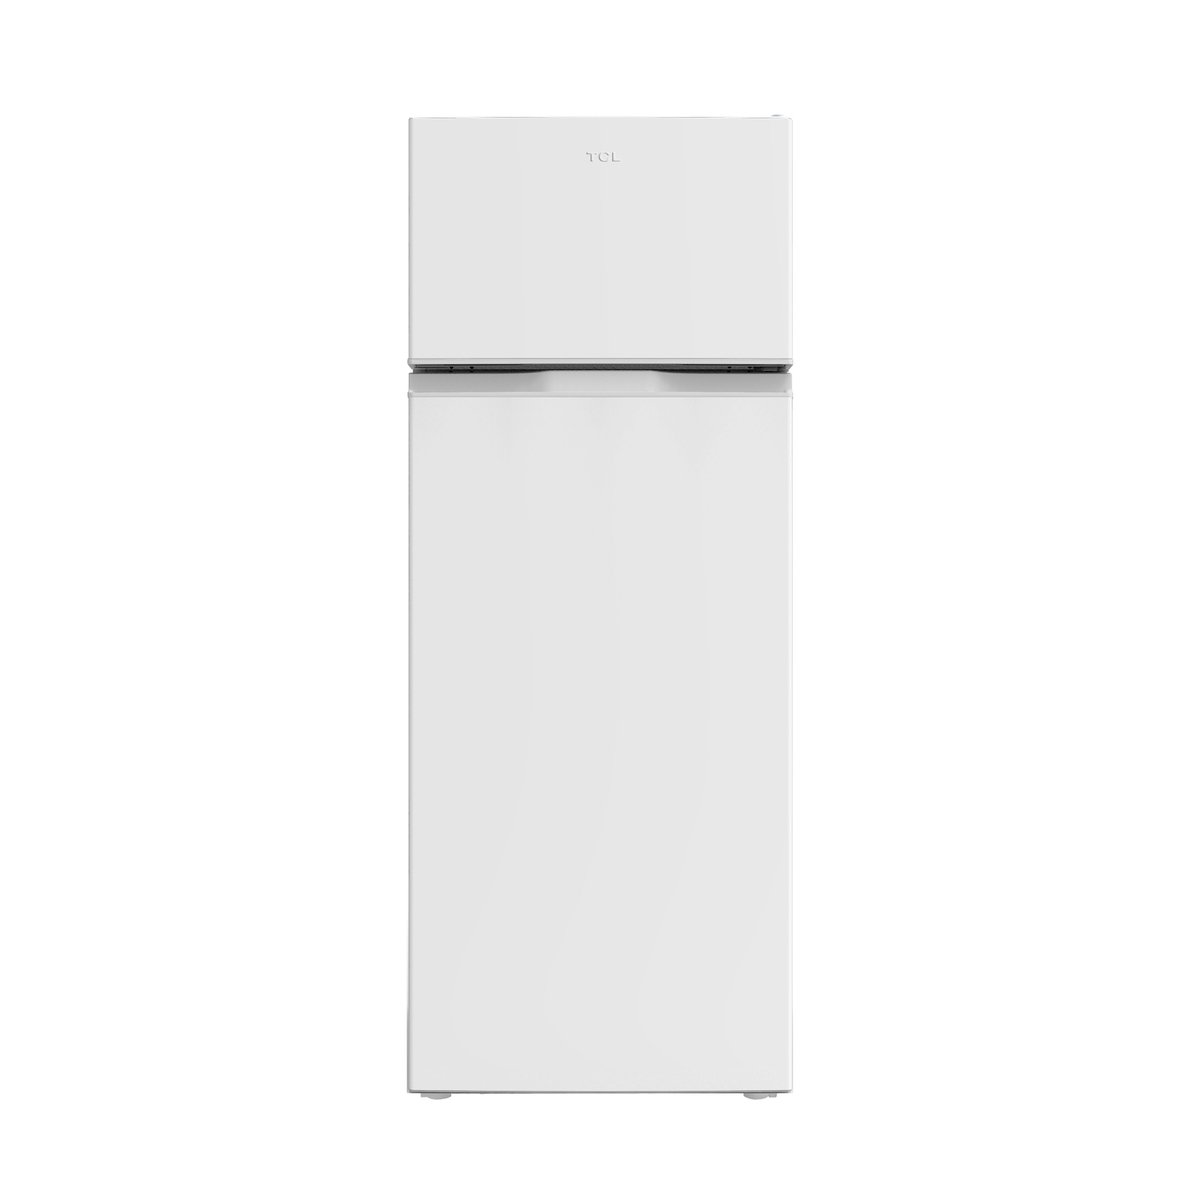 TCL Double Door Refrigerator TM-260A 260Ltr